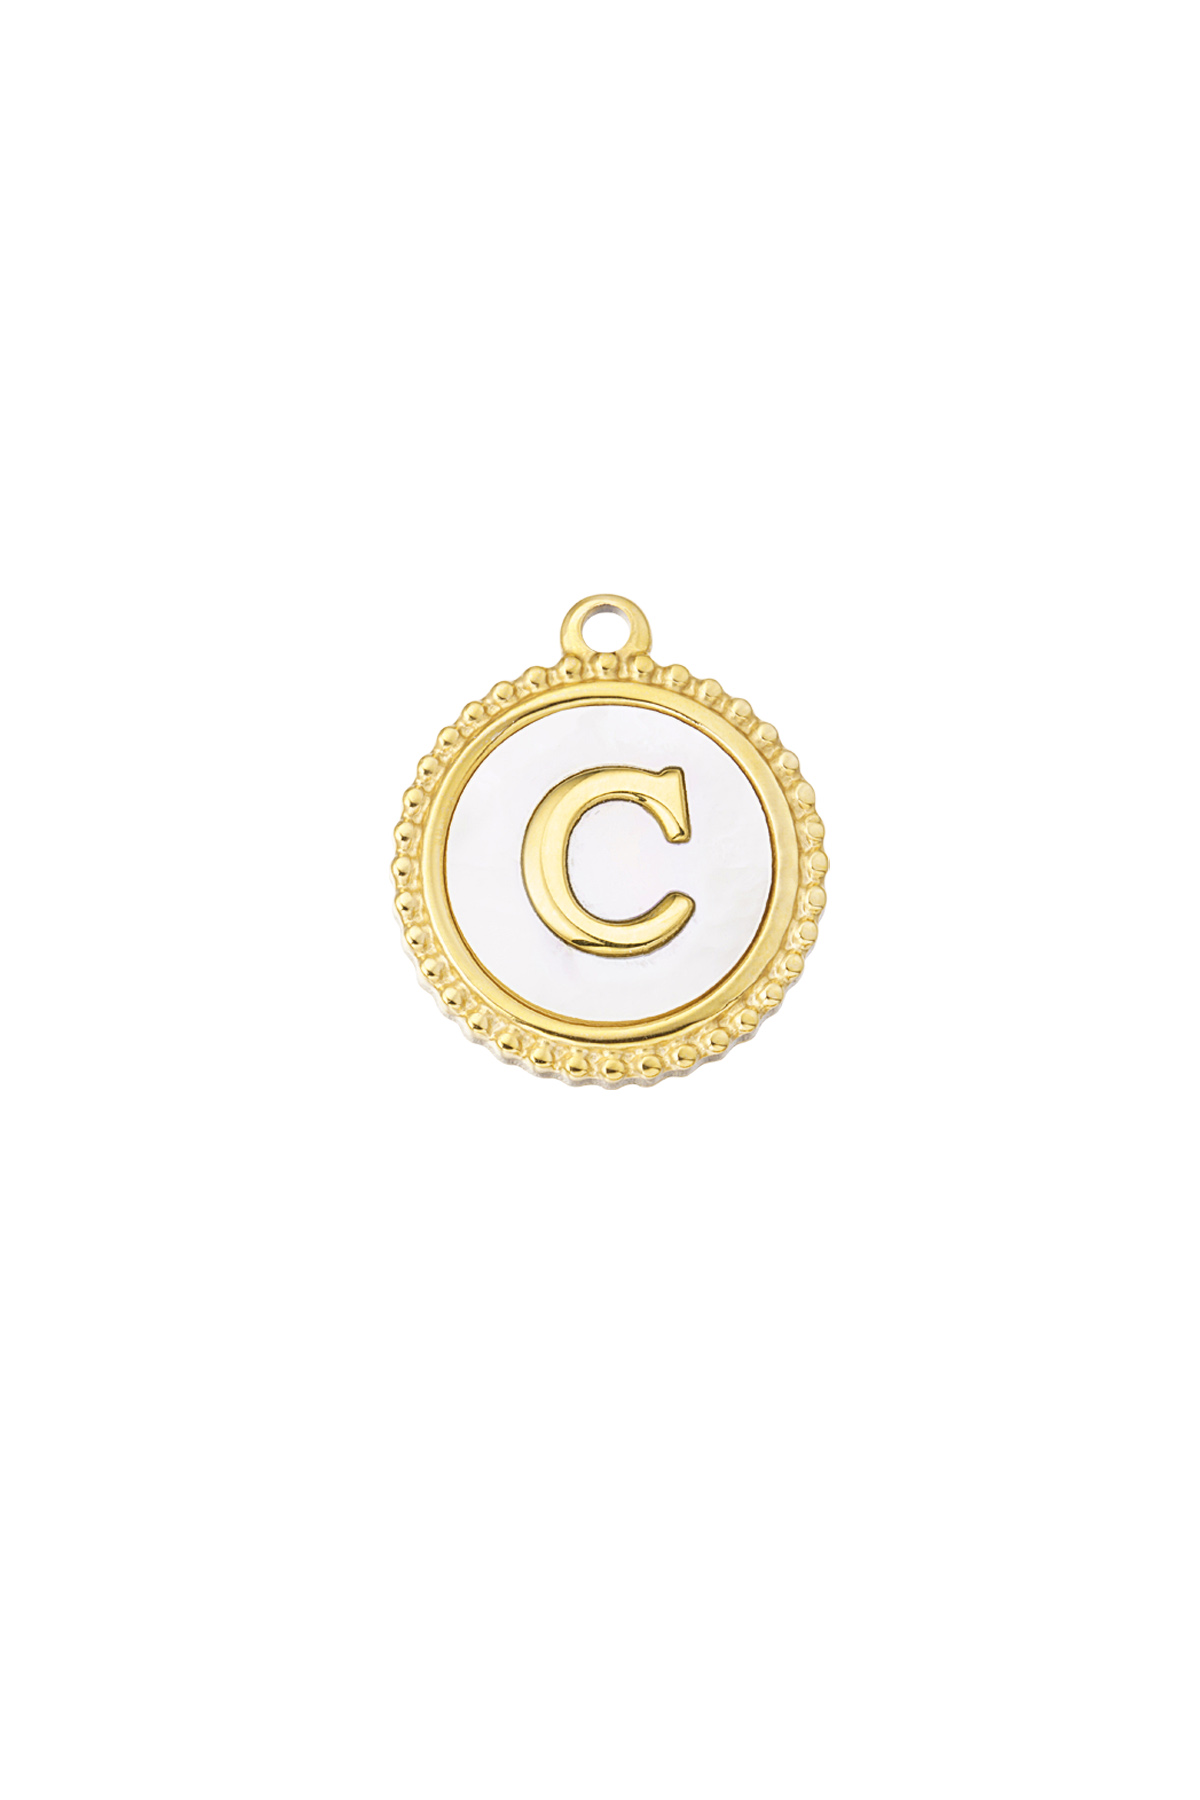 Gold / Charm elegante C - oro/bianco Immagine33